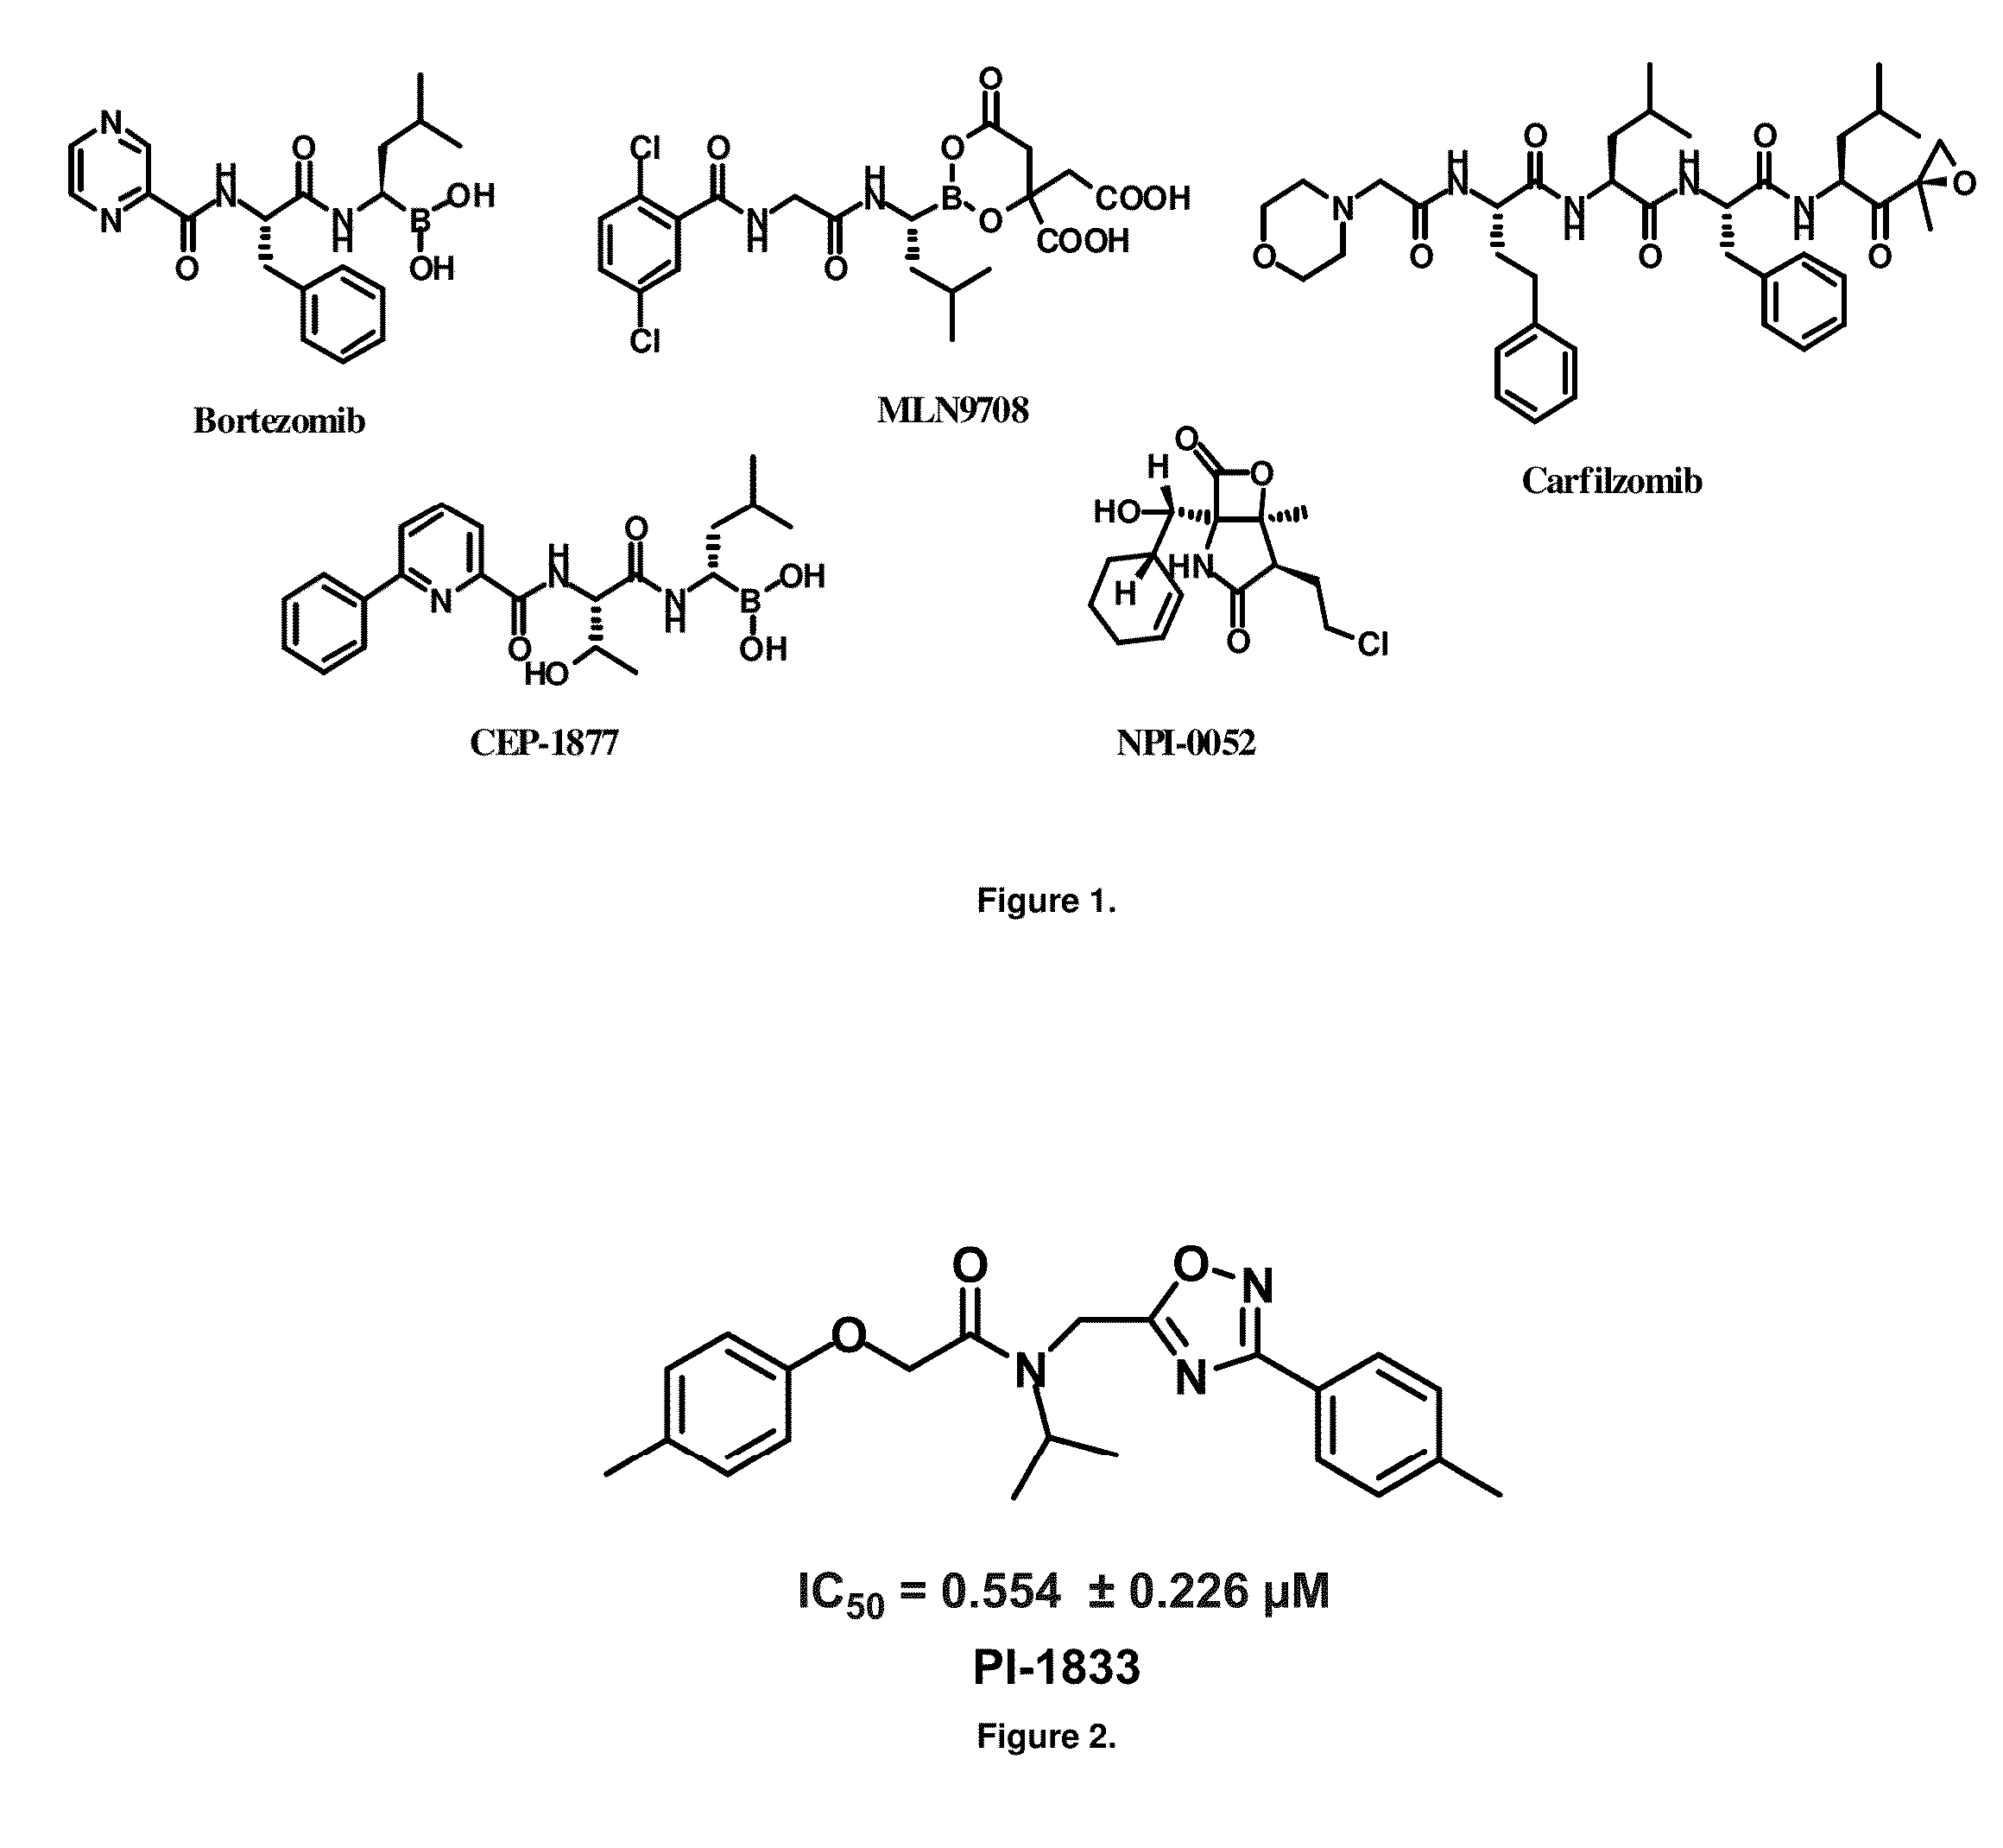 Proteasome chymotrypsin-like inhibition using pi-1833 analogs